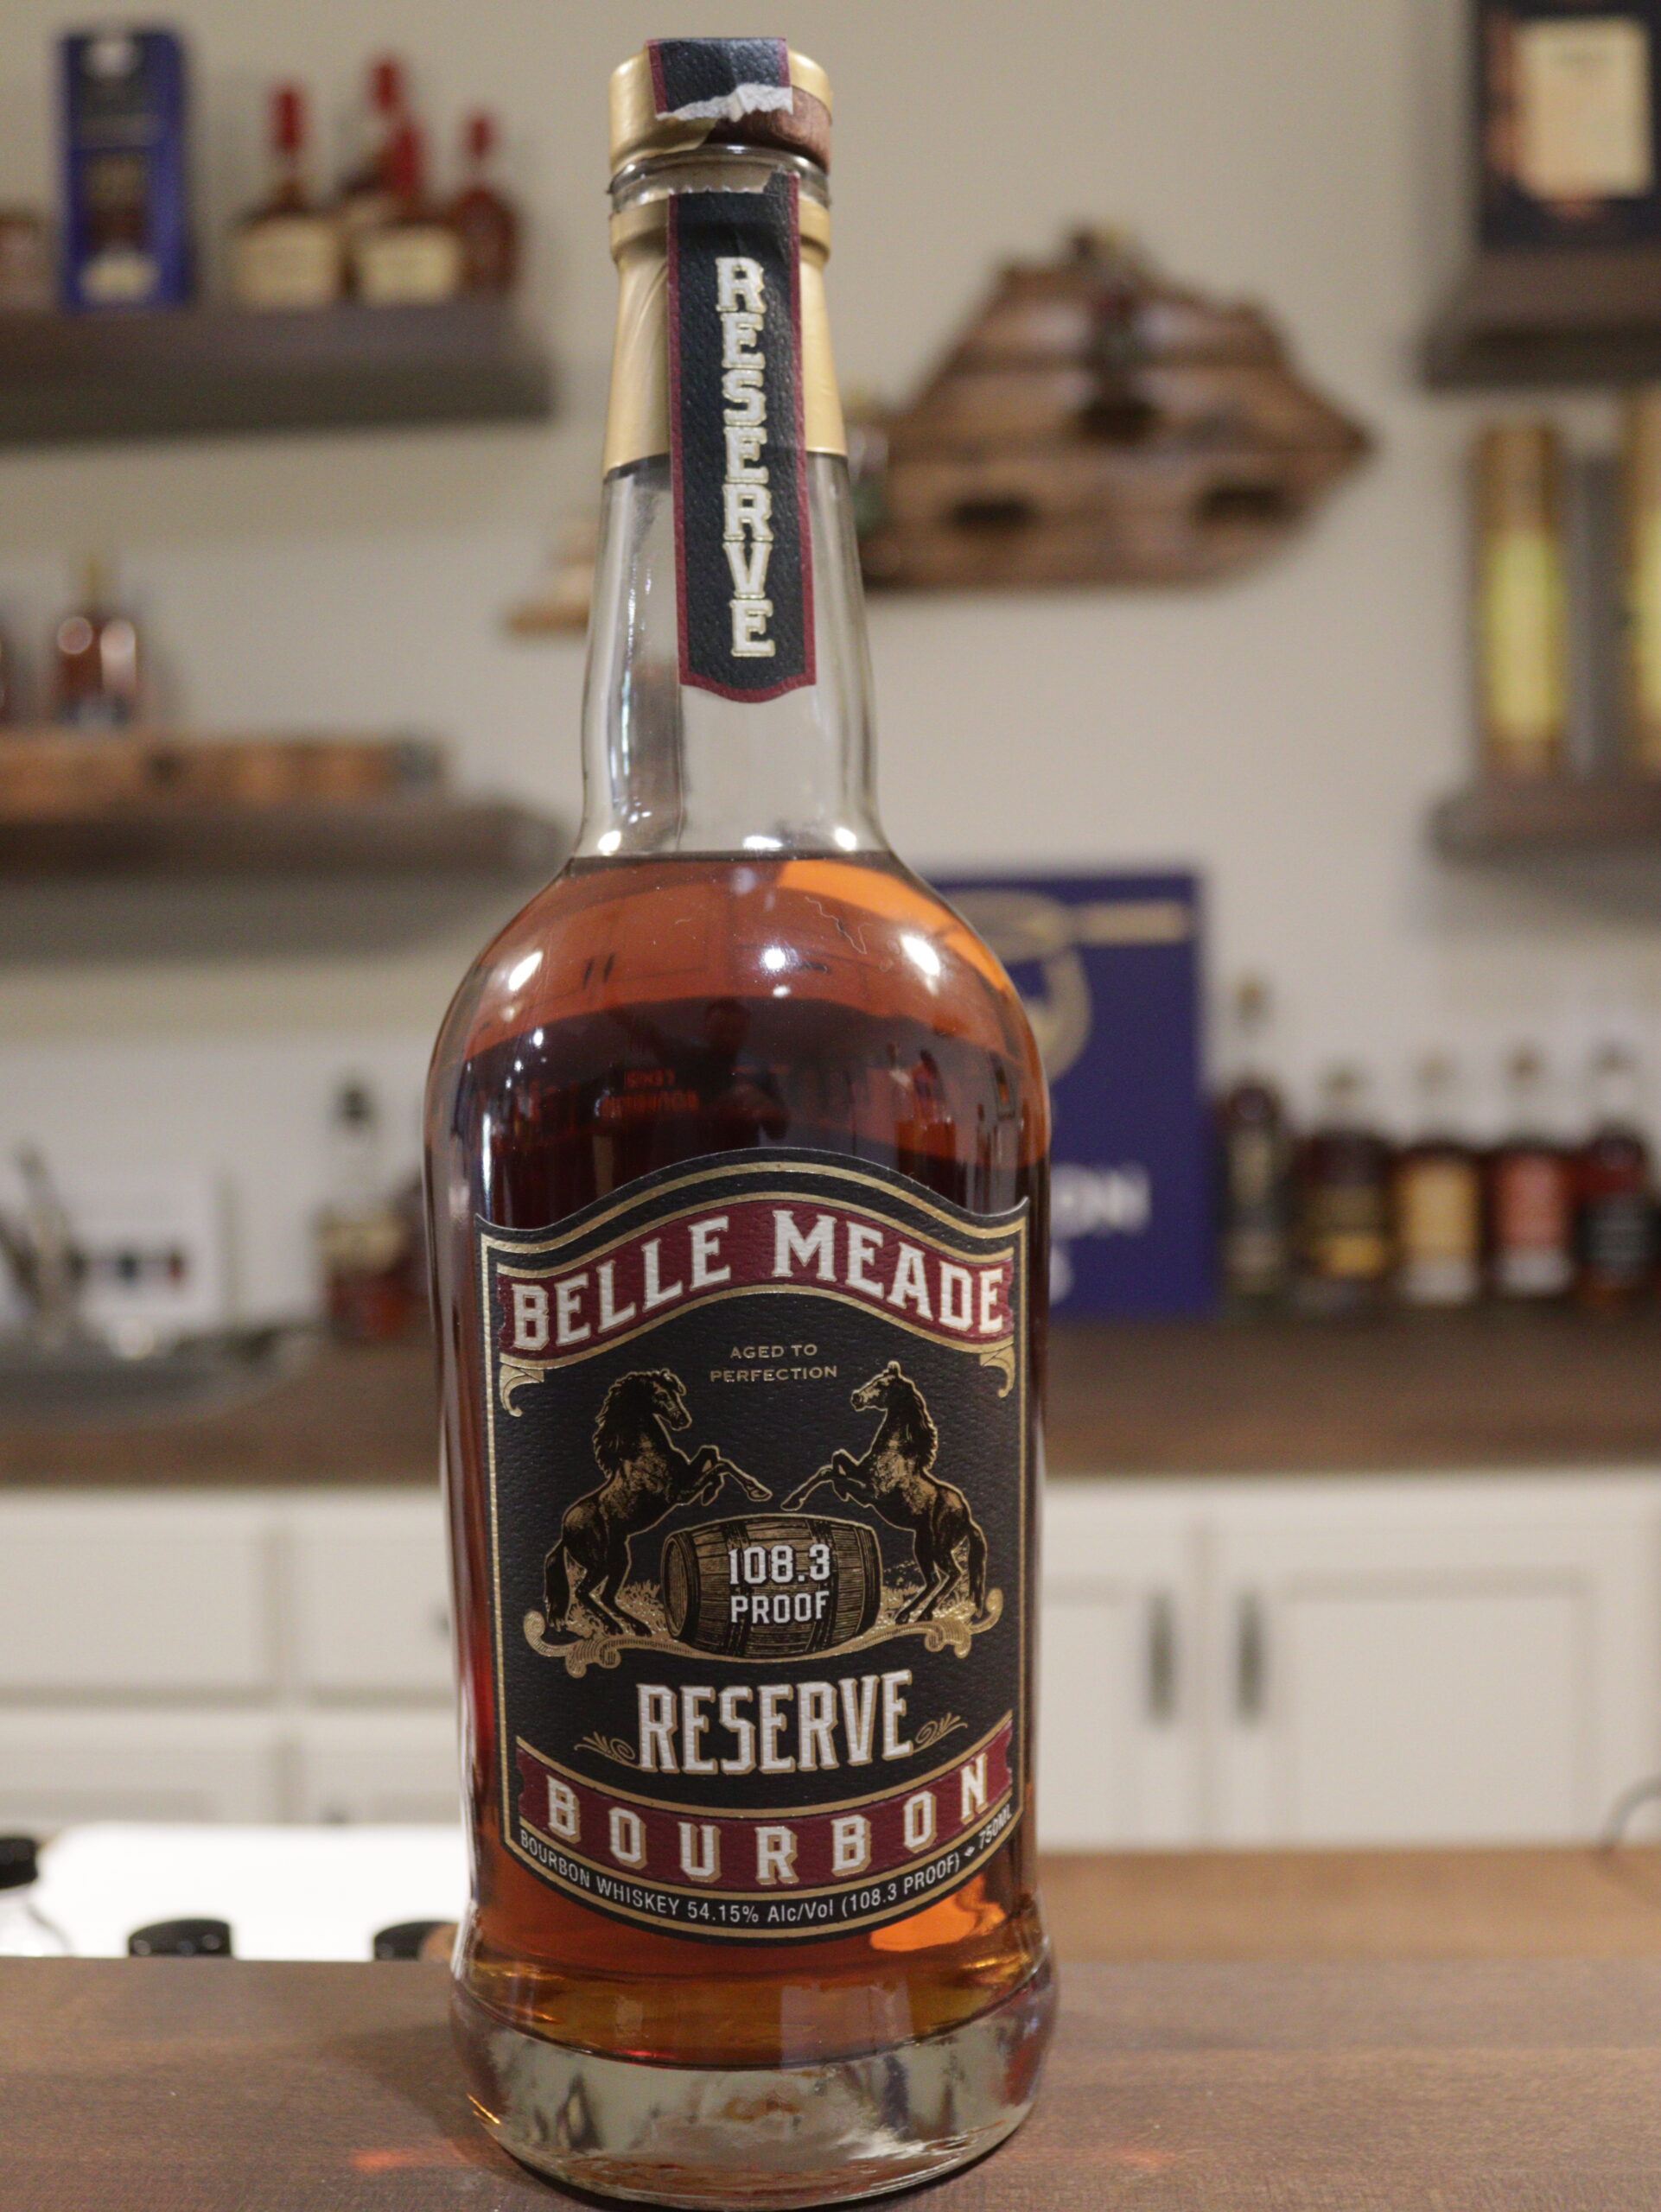 Belle Meade Reserve: A Quality Pour